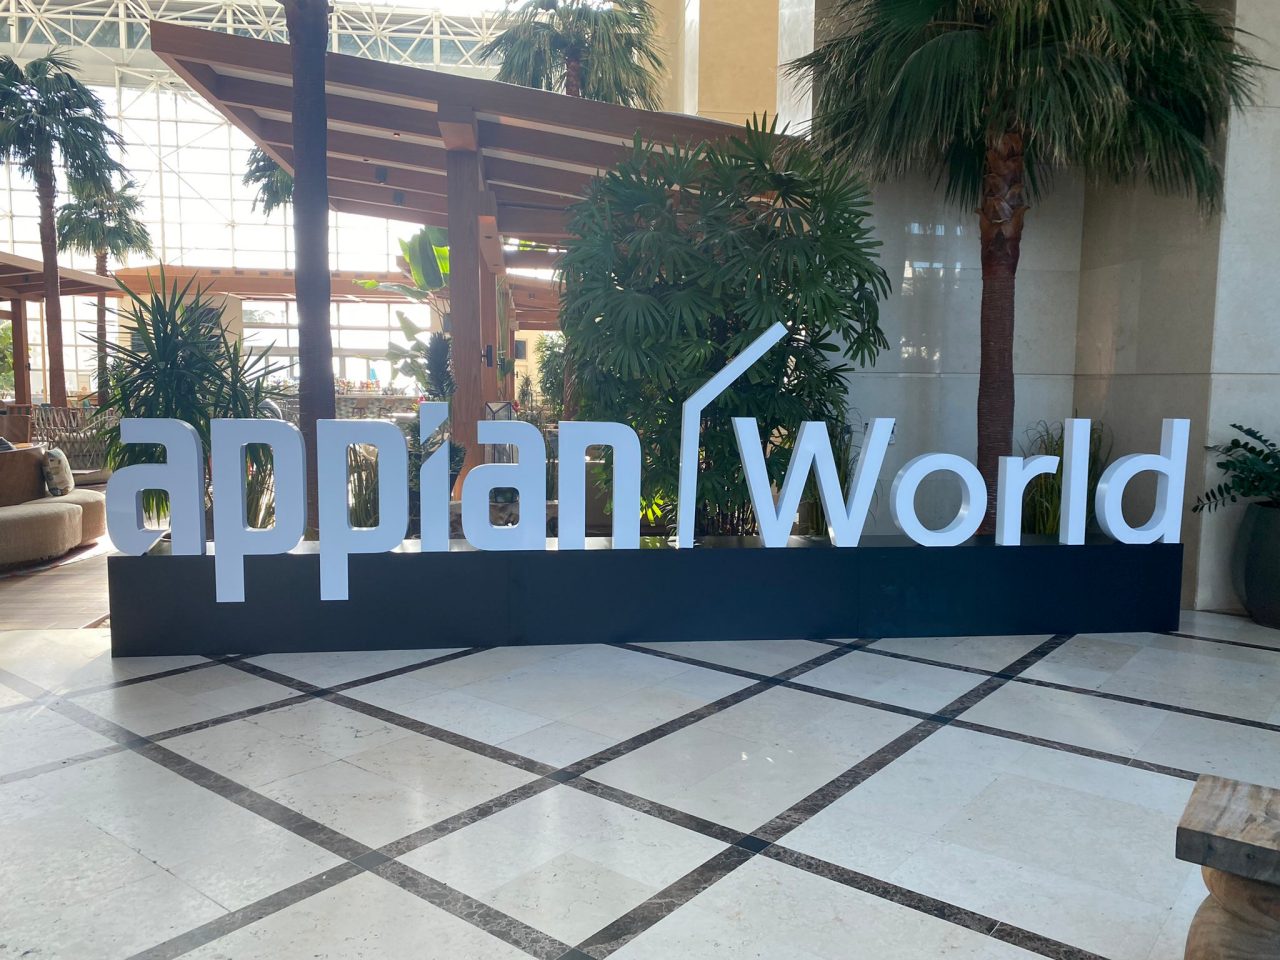 appian world logo at resort